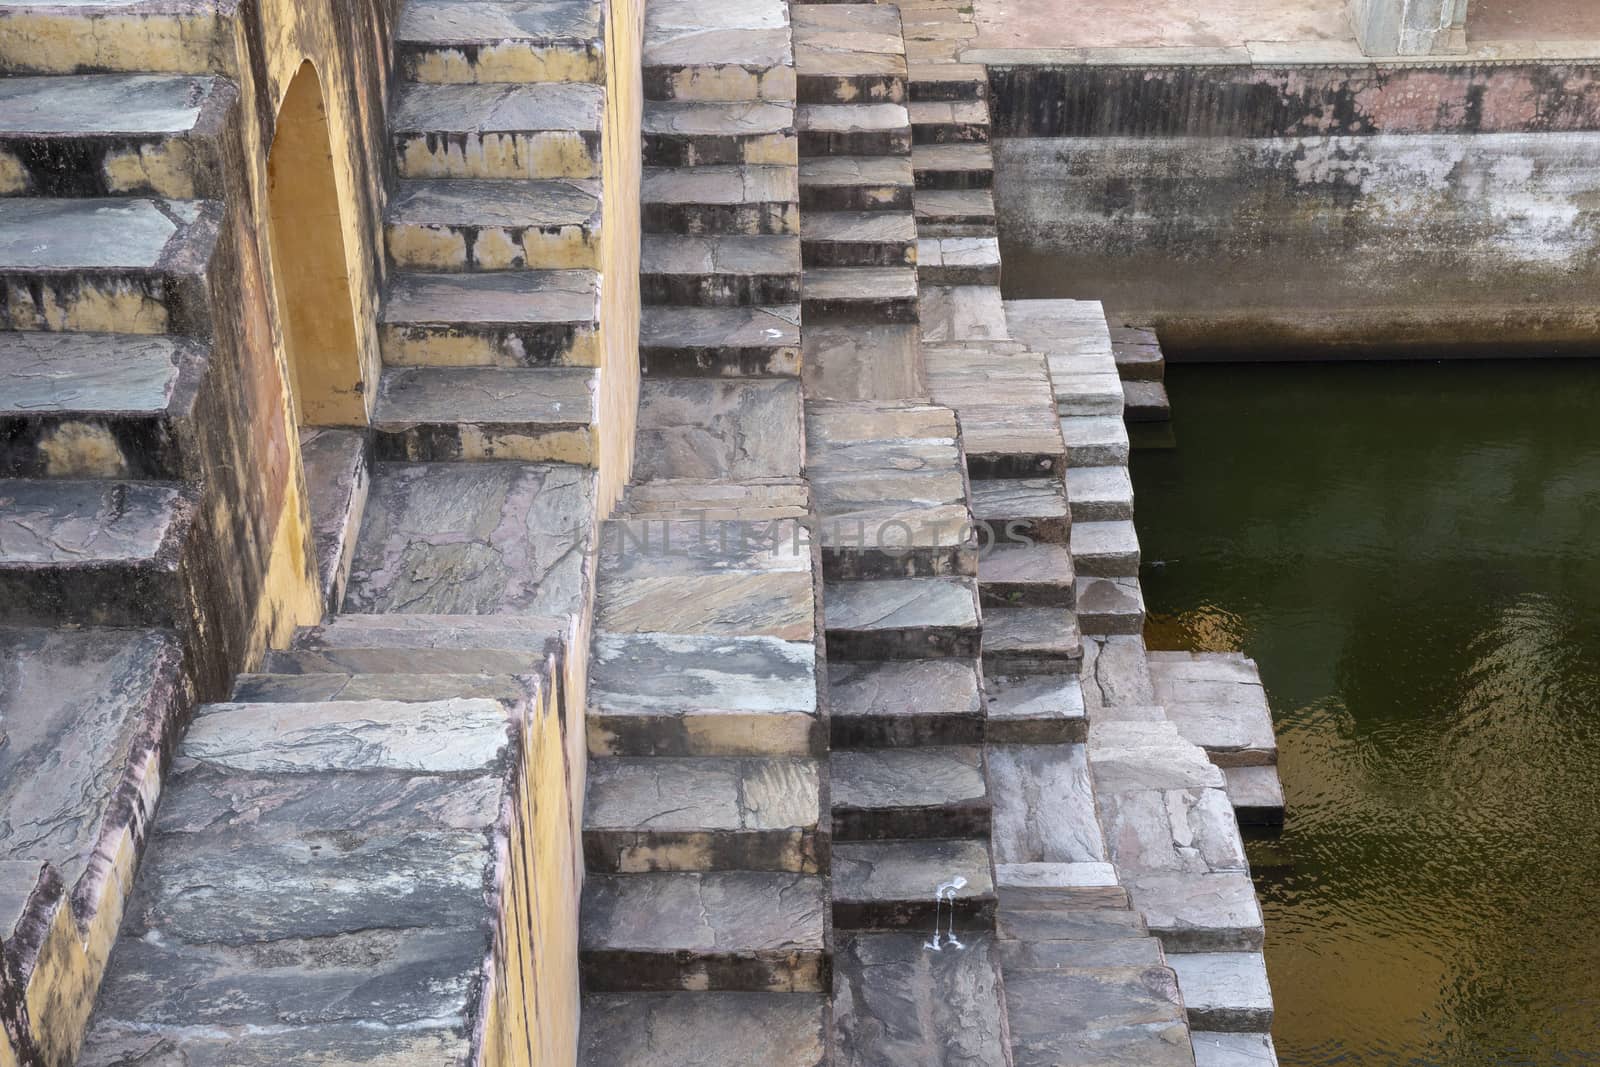 Close up the stepwells of Chand Baori, in Jaipur, India.